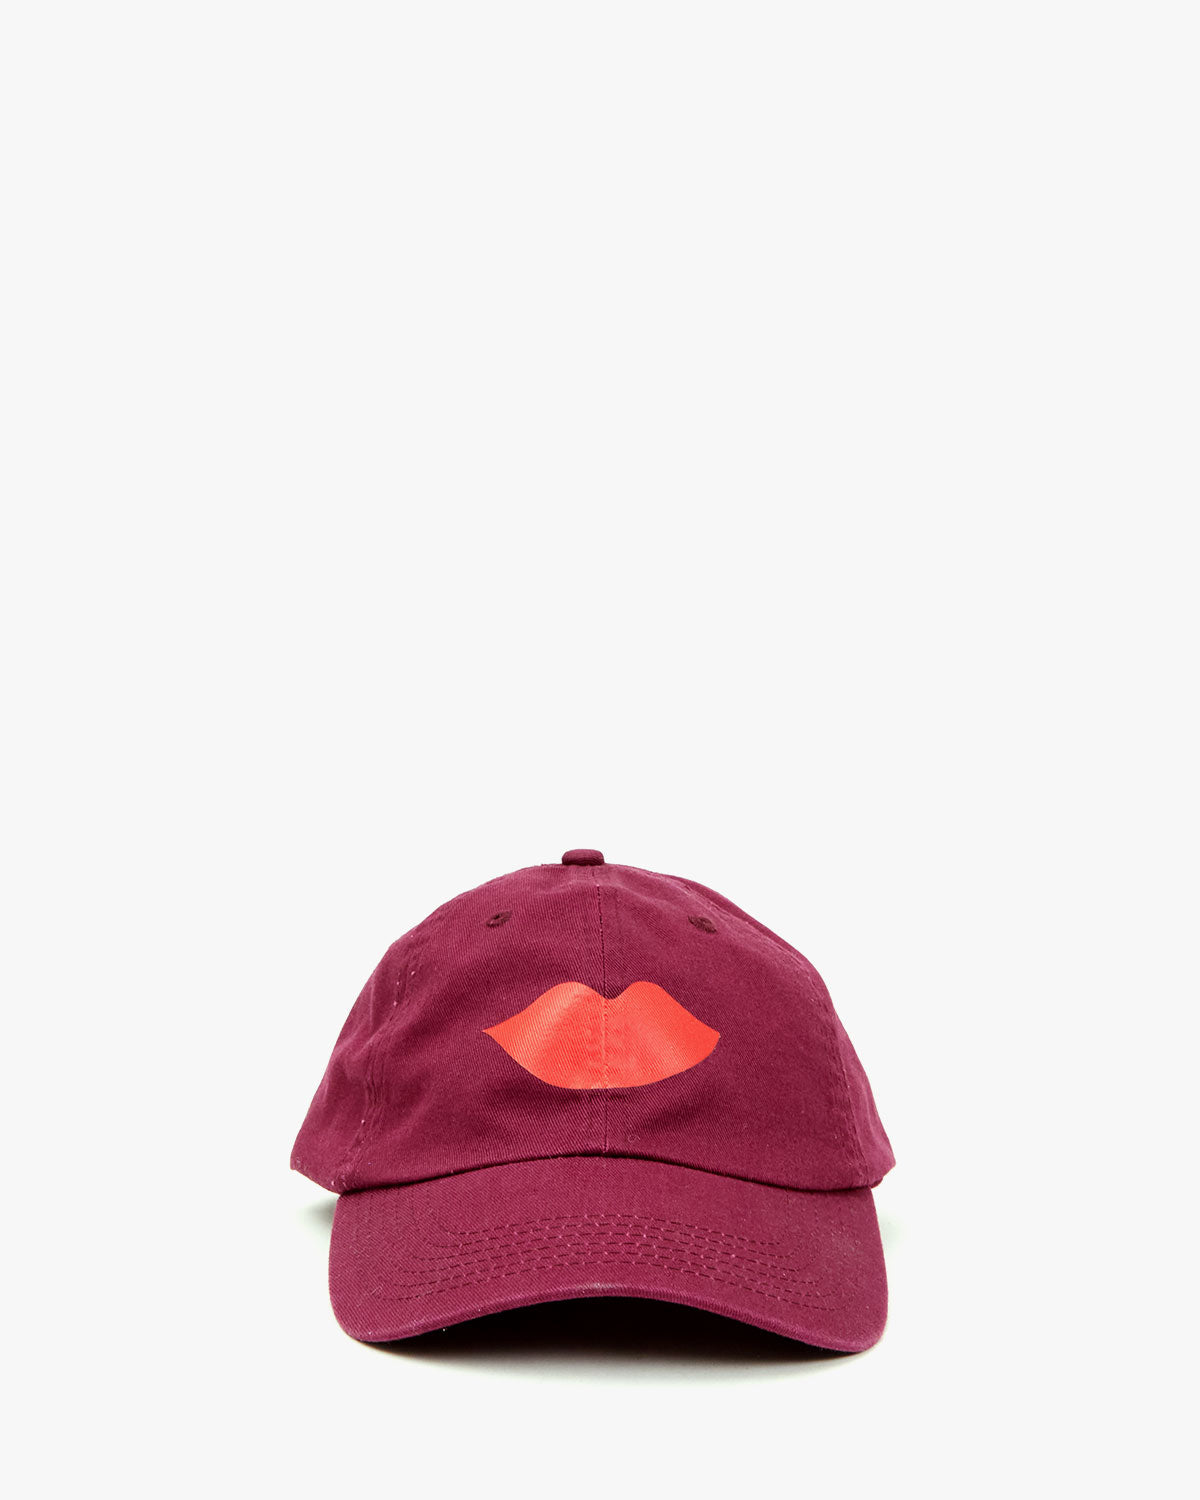 Oxblood with Lips Baseball Hat